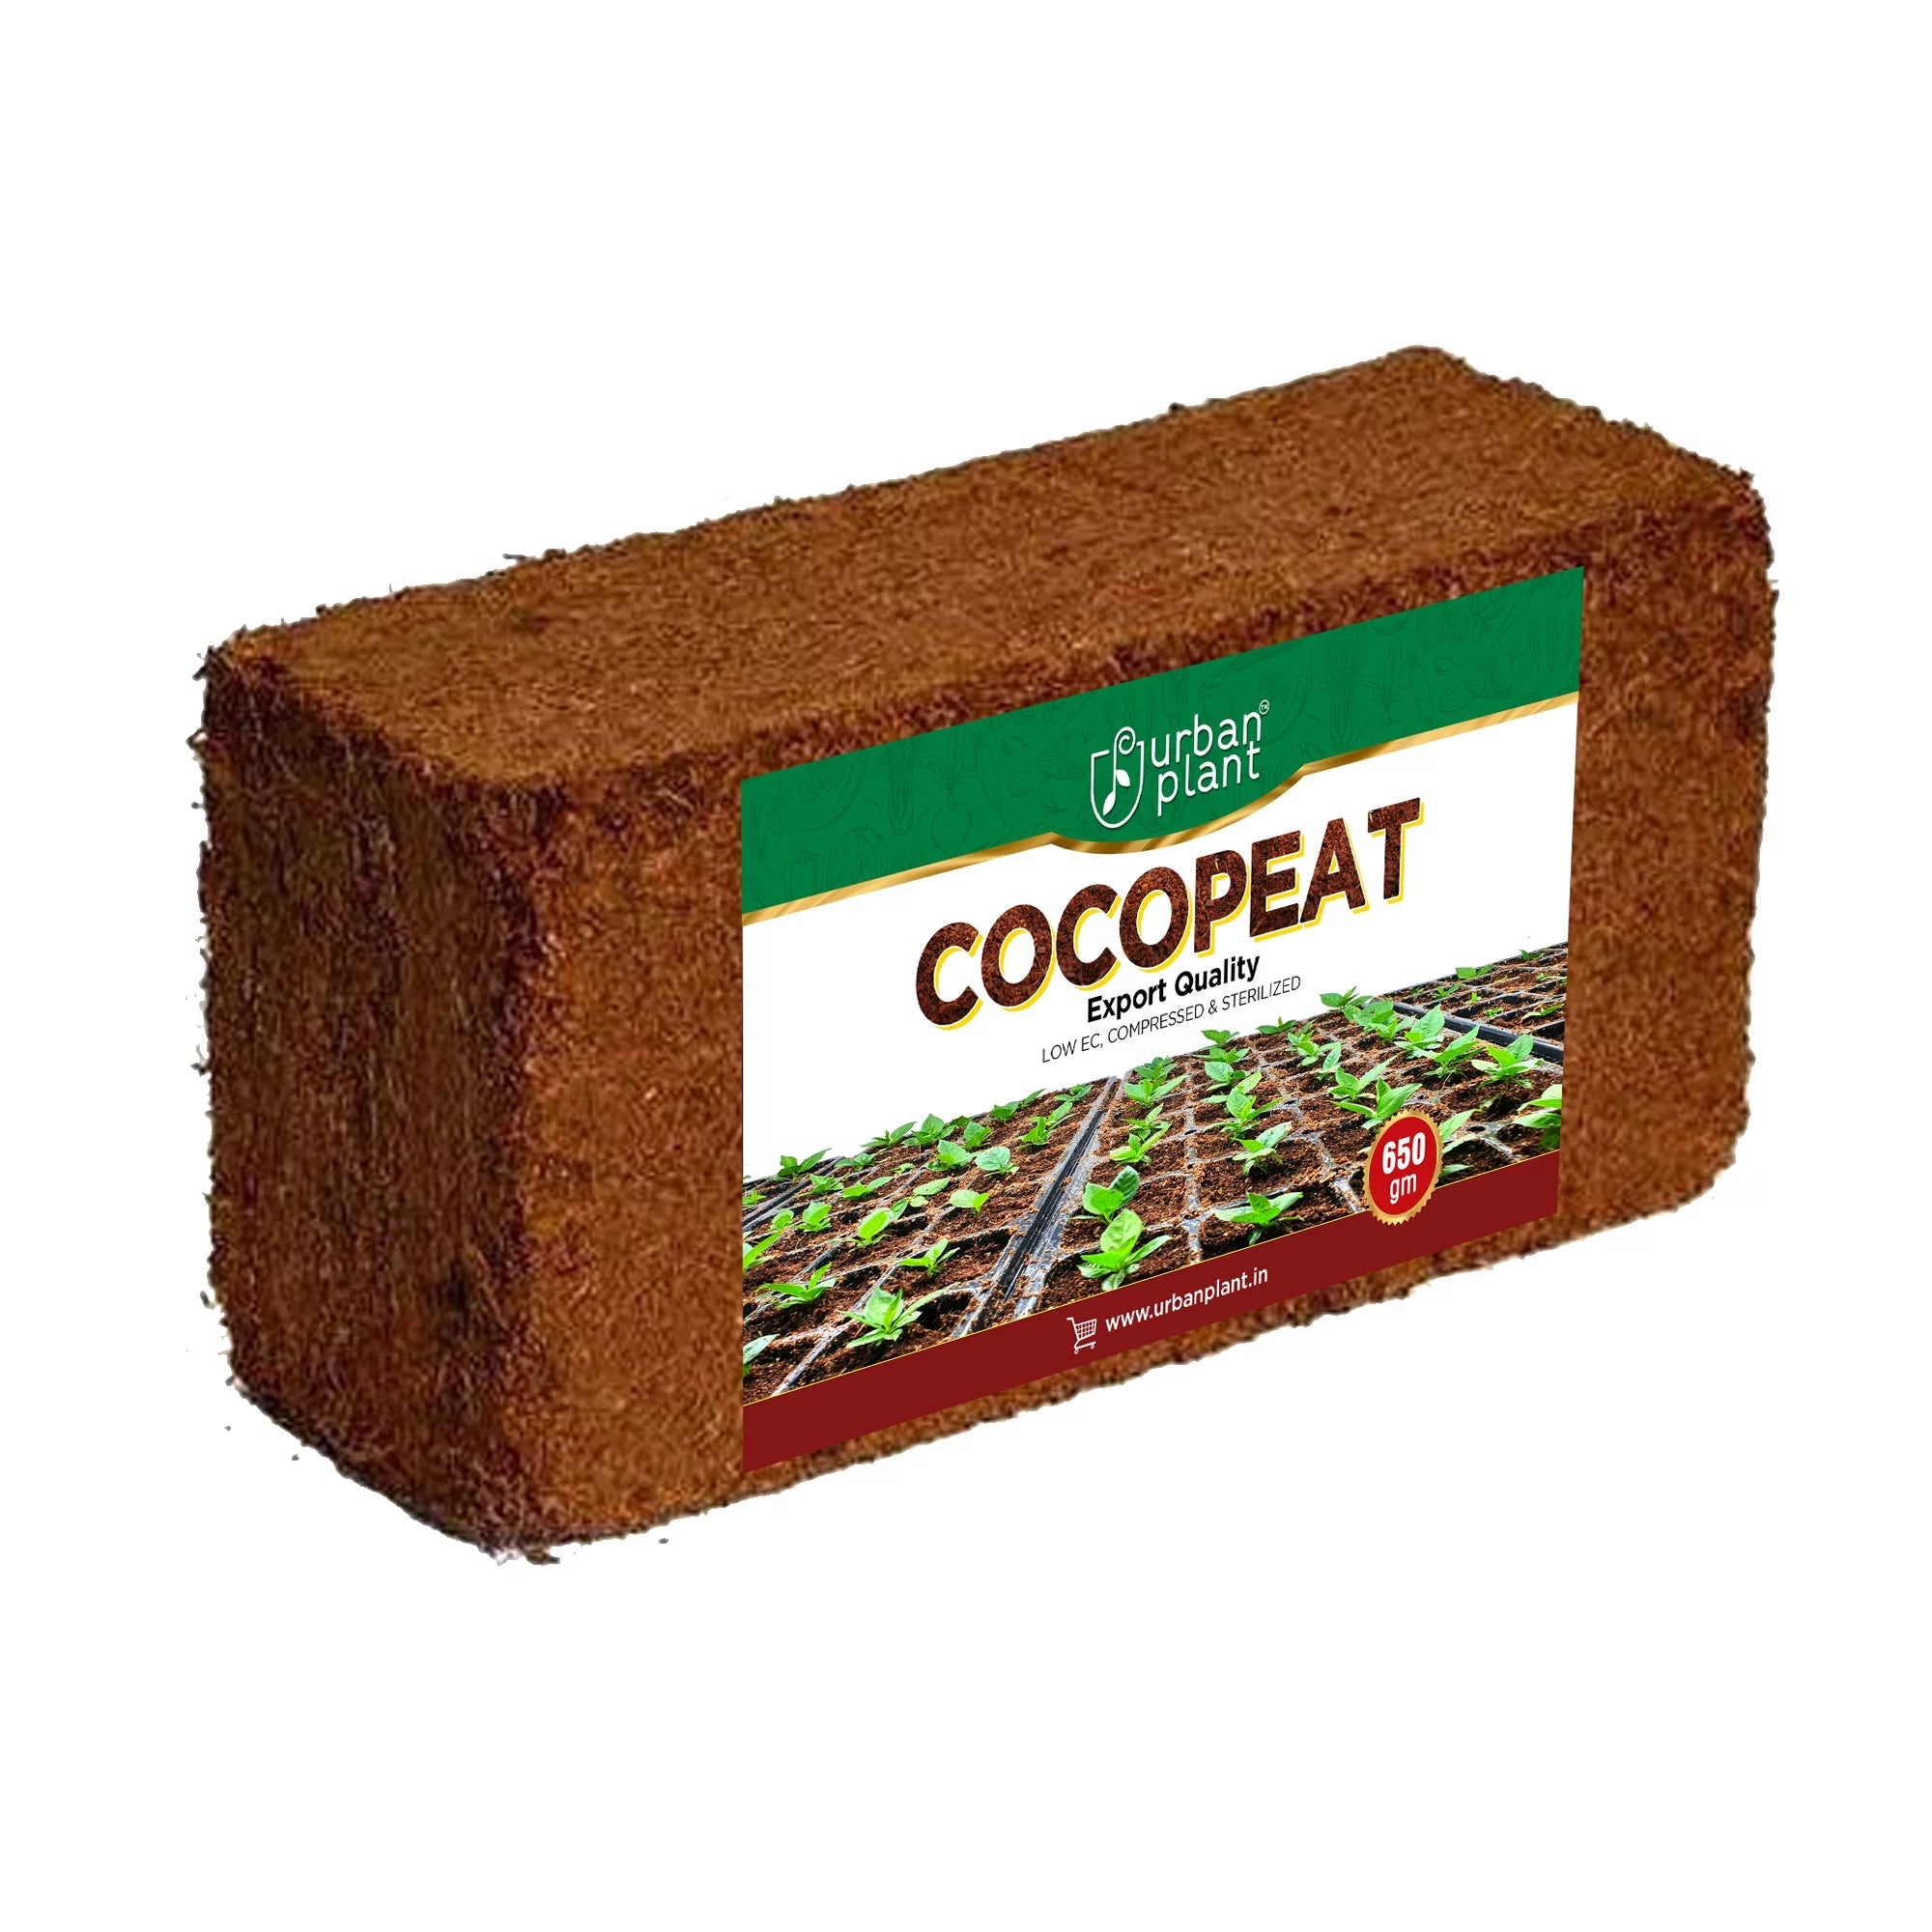 Cocopeat Brick 650 Gram Potting Mix Urban Plant Pack of 1 